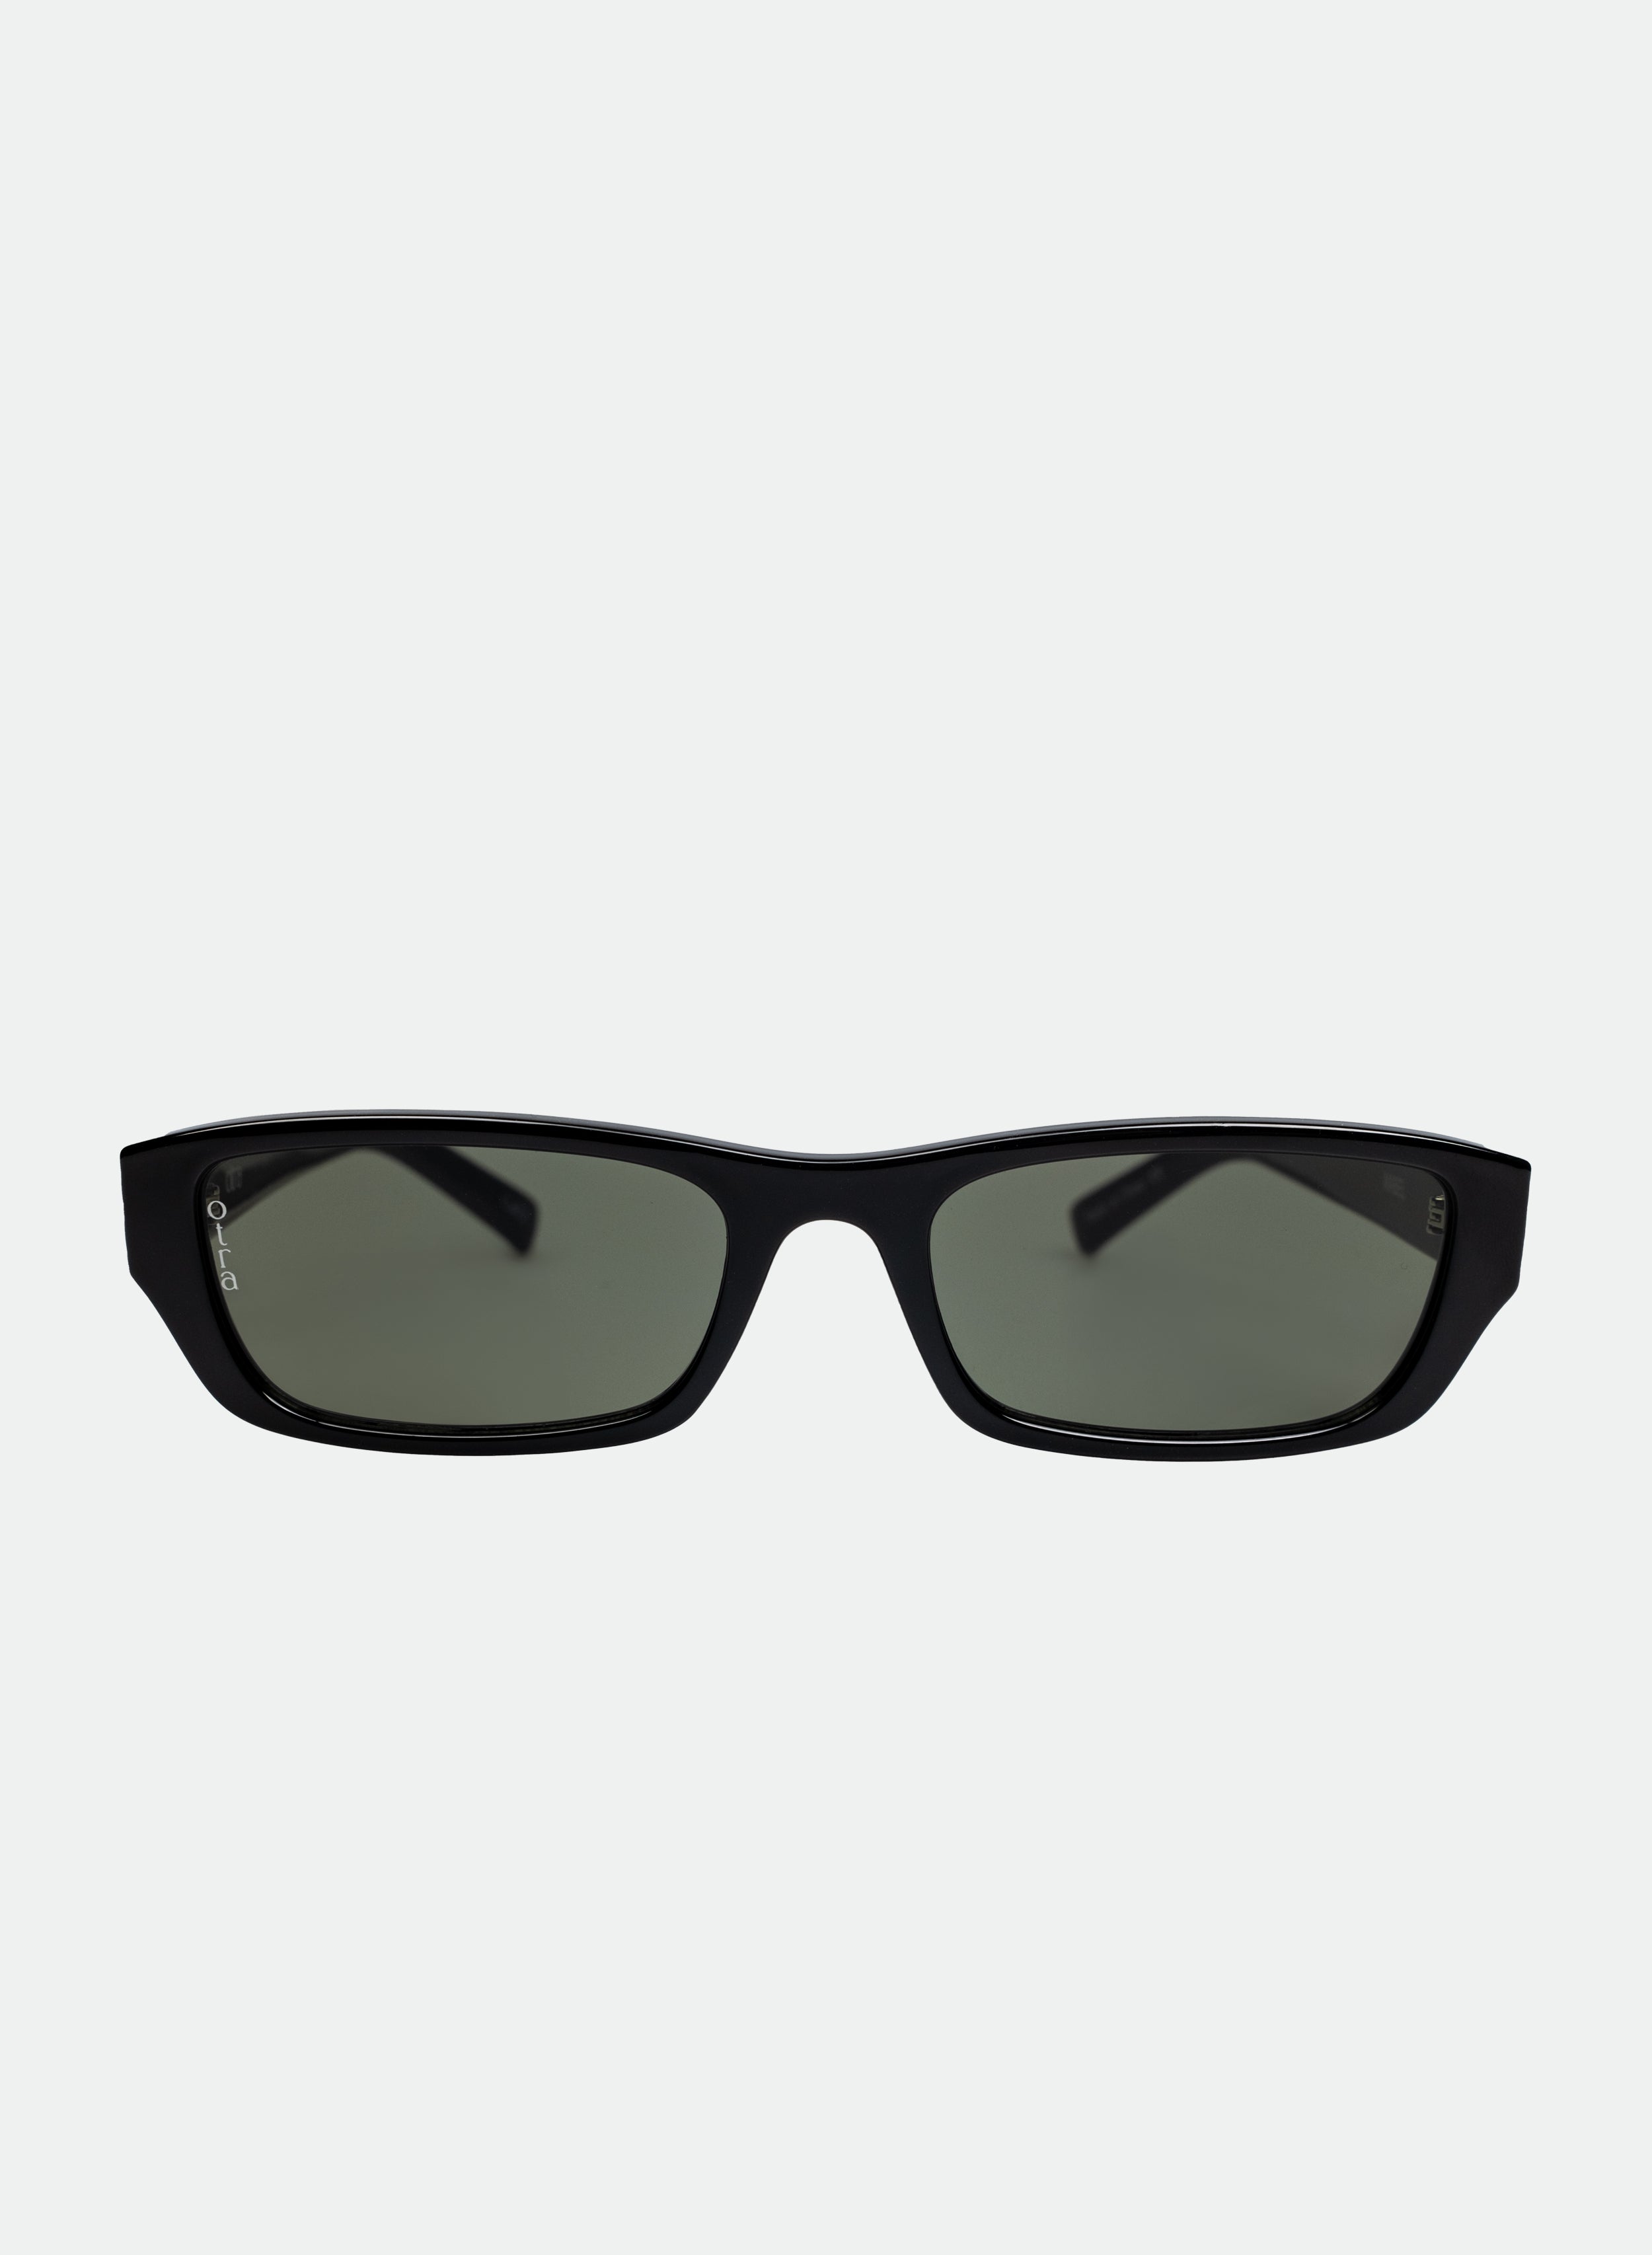 Buy Sheomy Unisex Combo offer pack of 4 shades glasses Black Candy MC stan  Rectangle Retro Vintage Narrow Sunglasses Women:Men Small Narrow Square Sun  Glasses Combo offer pack of 4 B083F337FN at